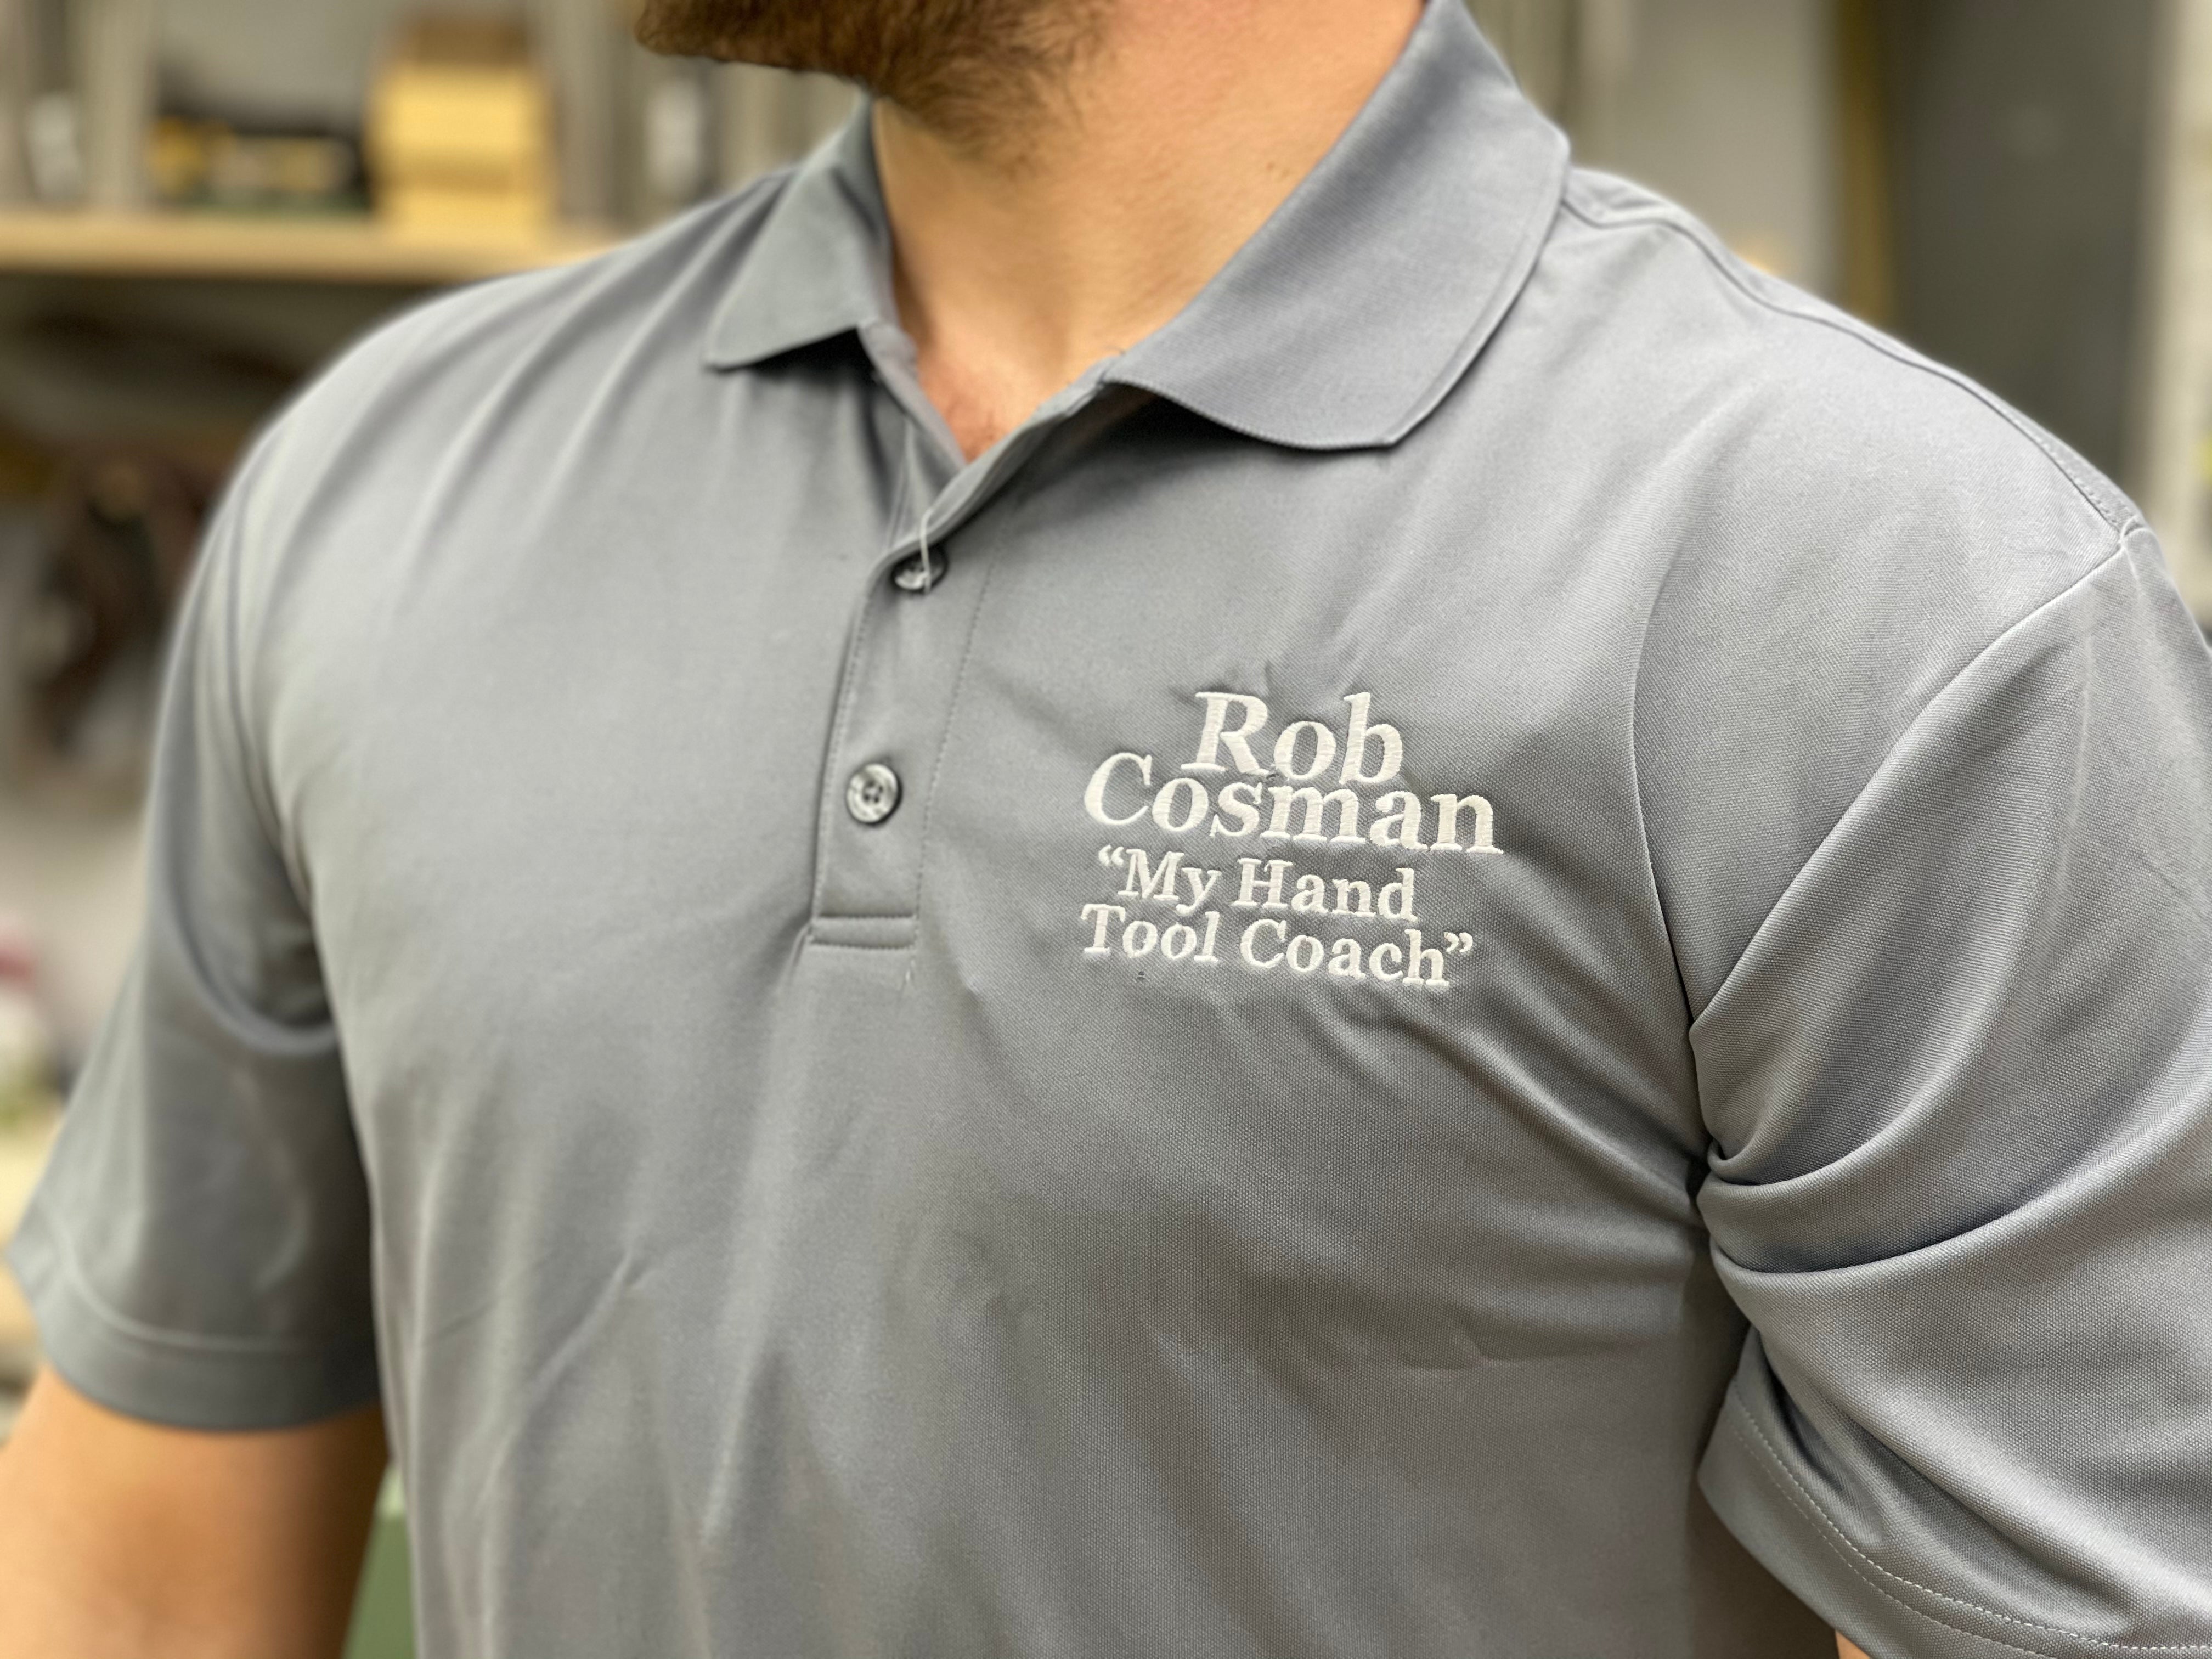 Rob Cosman's Polo Shirt: Steel Grey